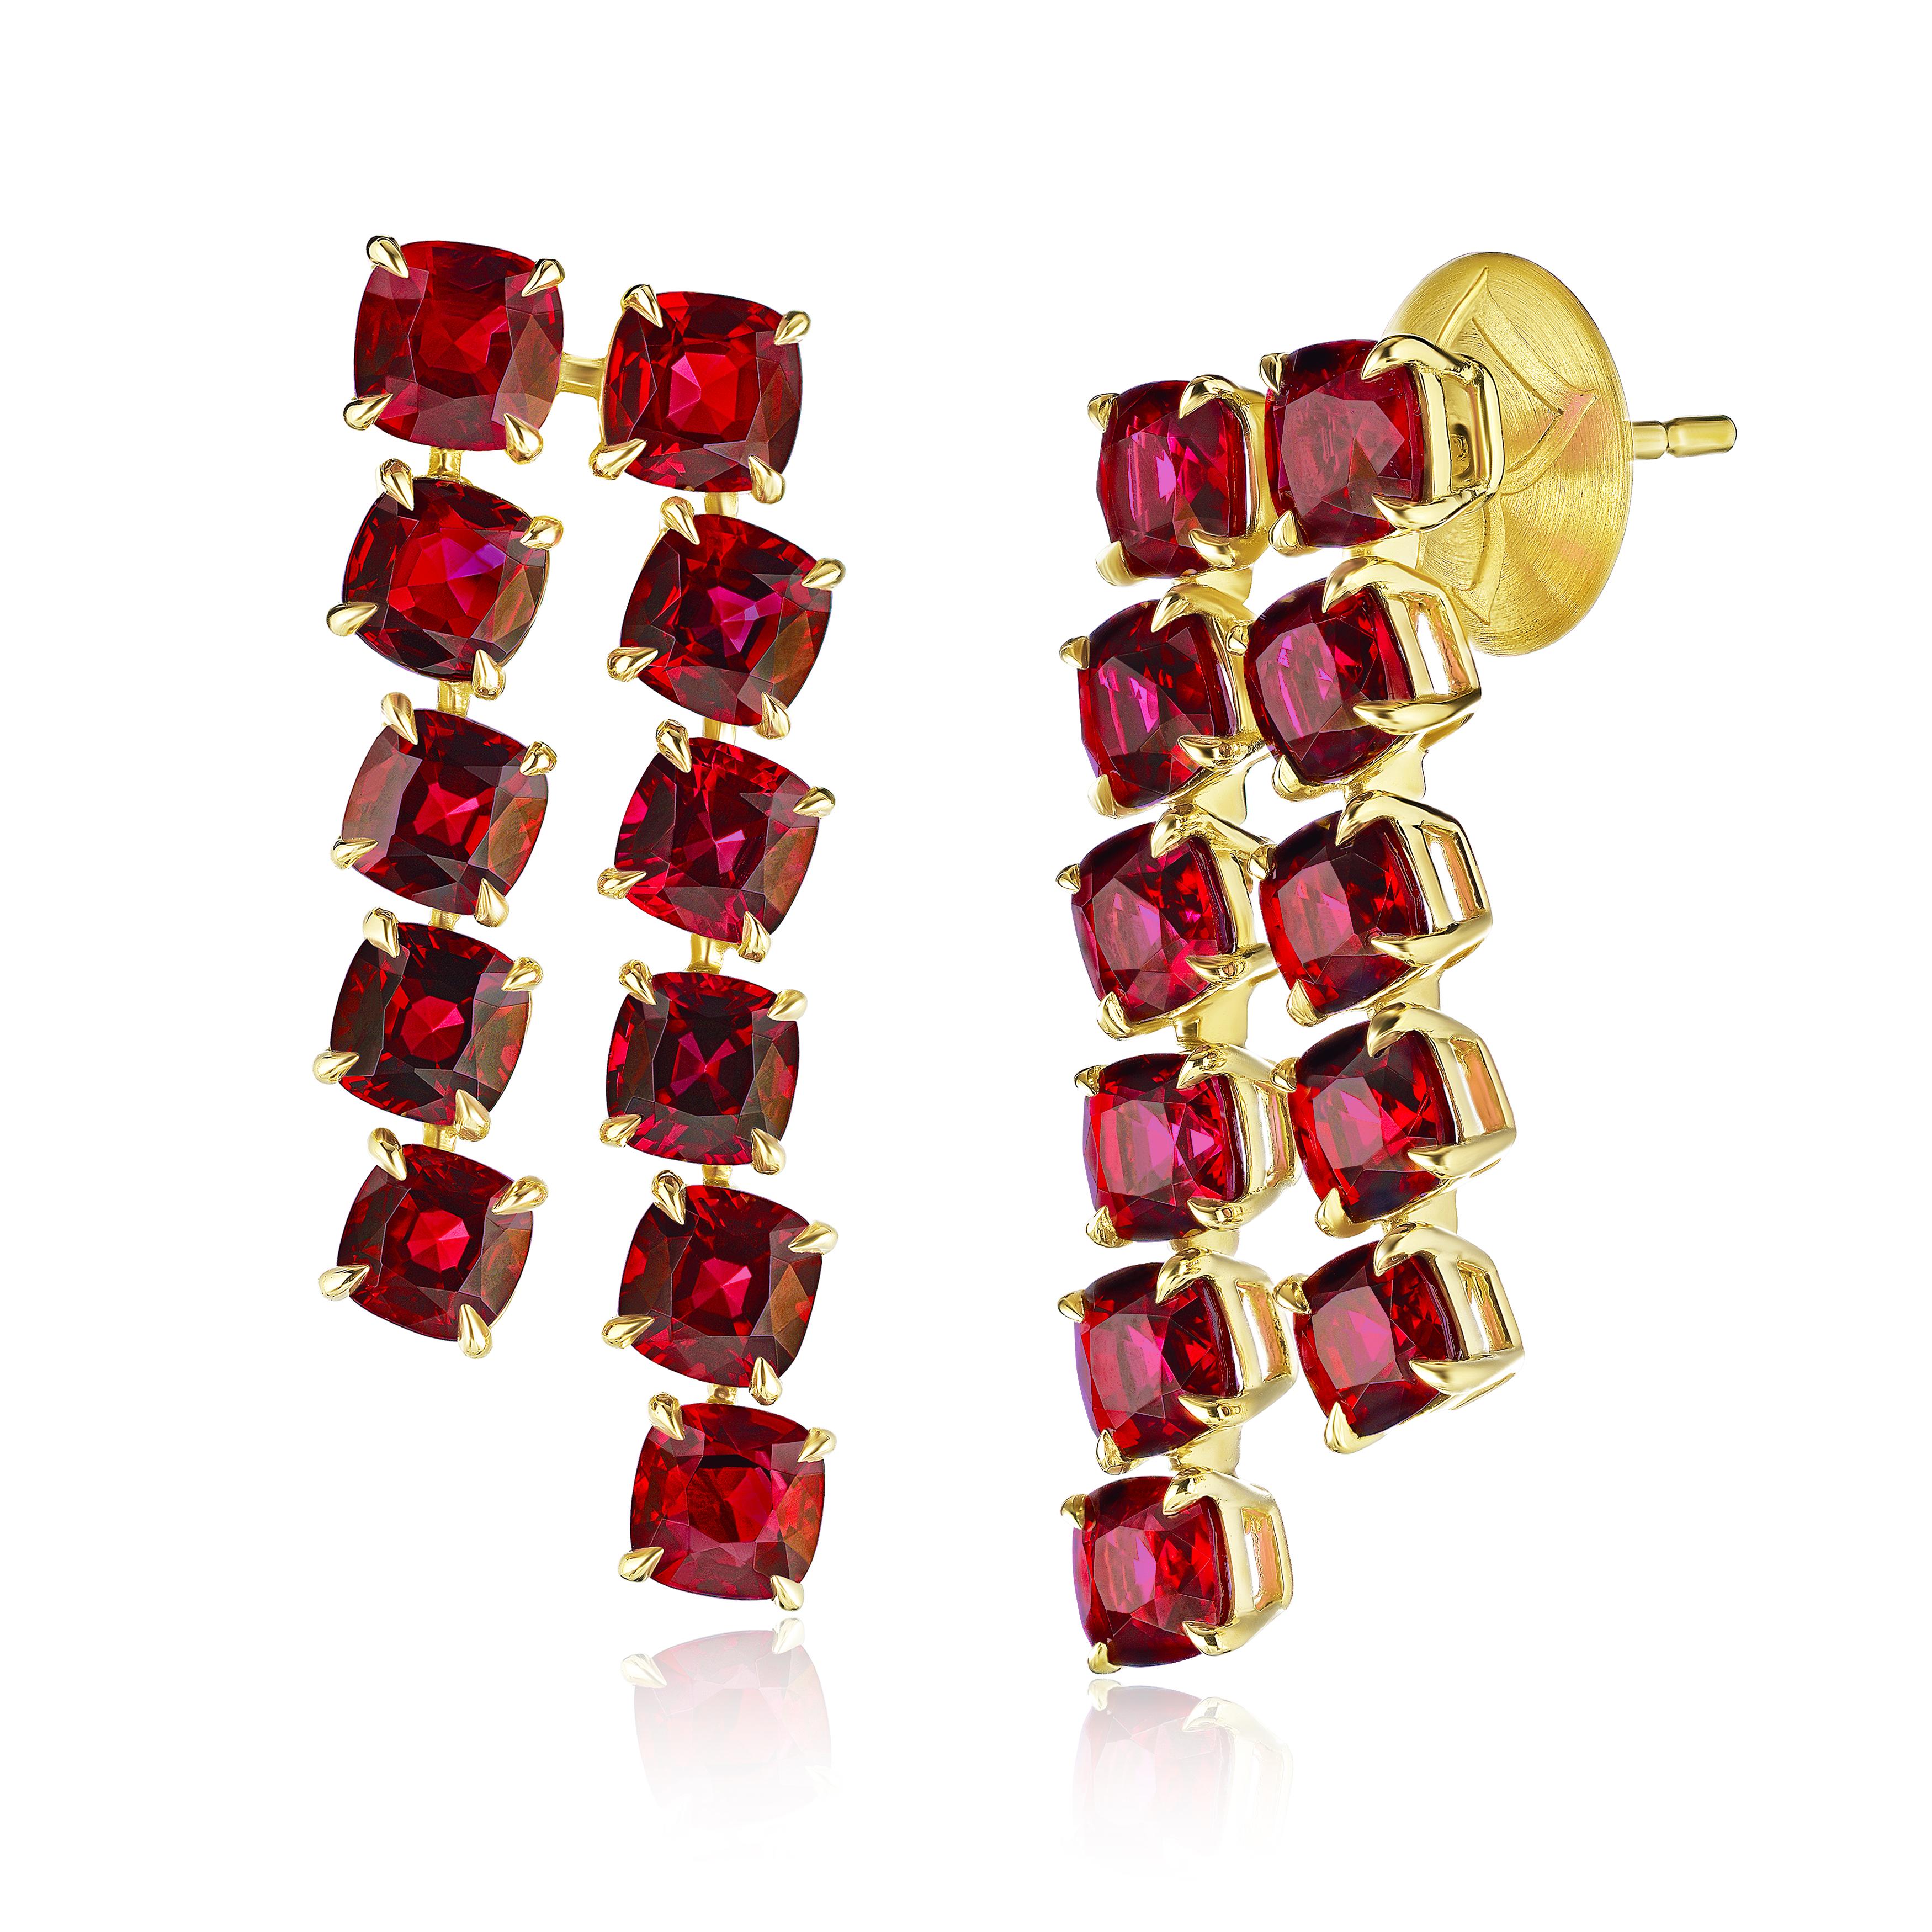 10.16 carat Cushion Ruby Drop Earrings set in 18k Yellow Gold